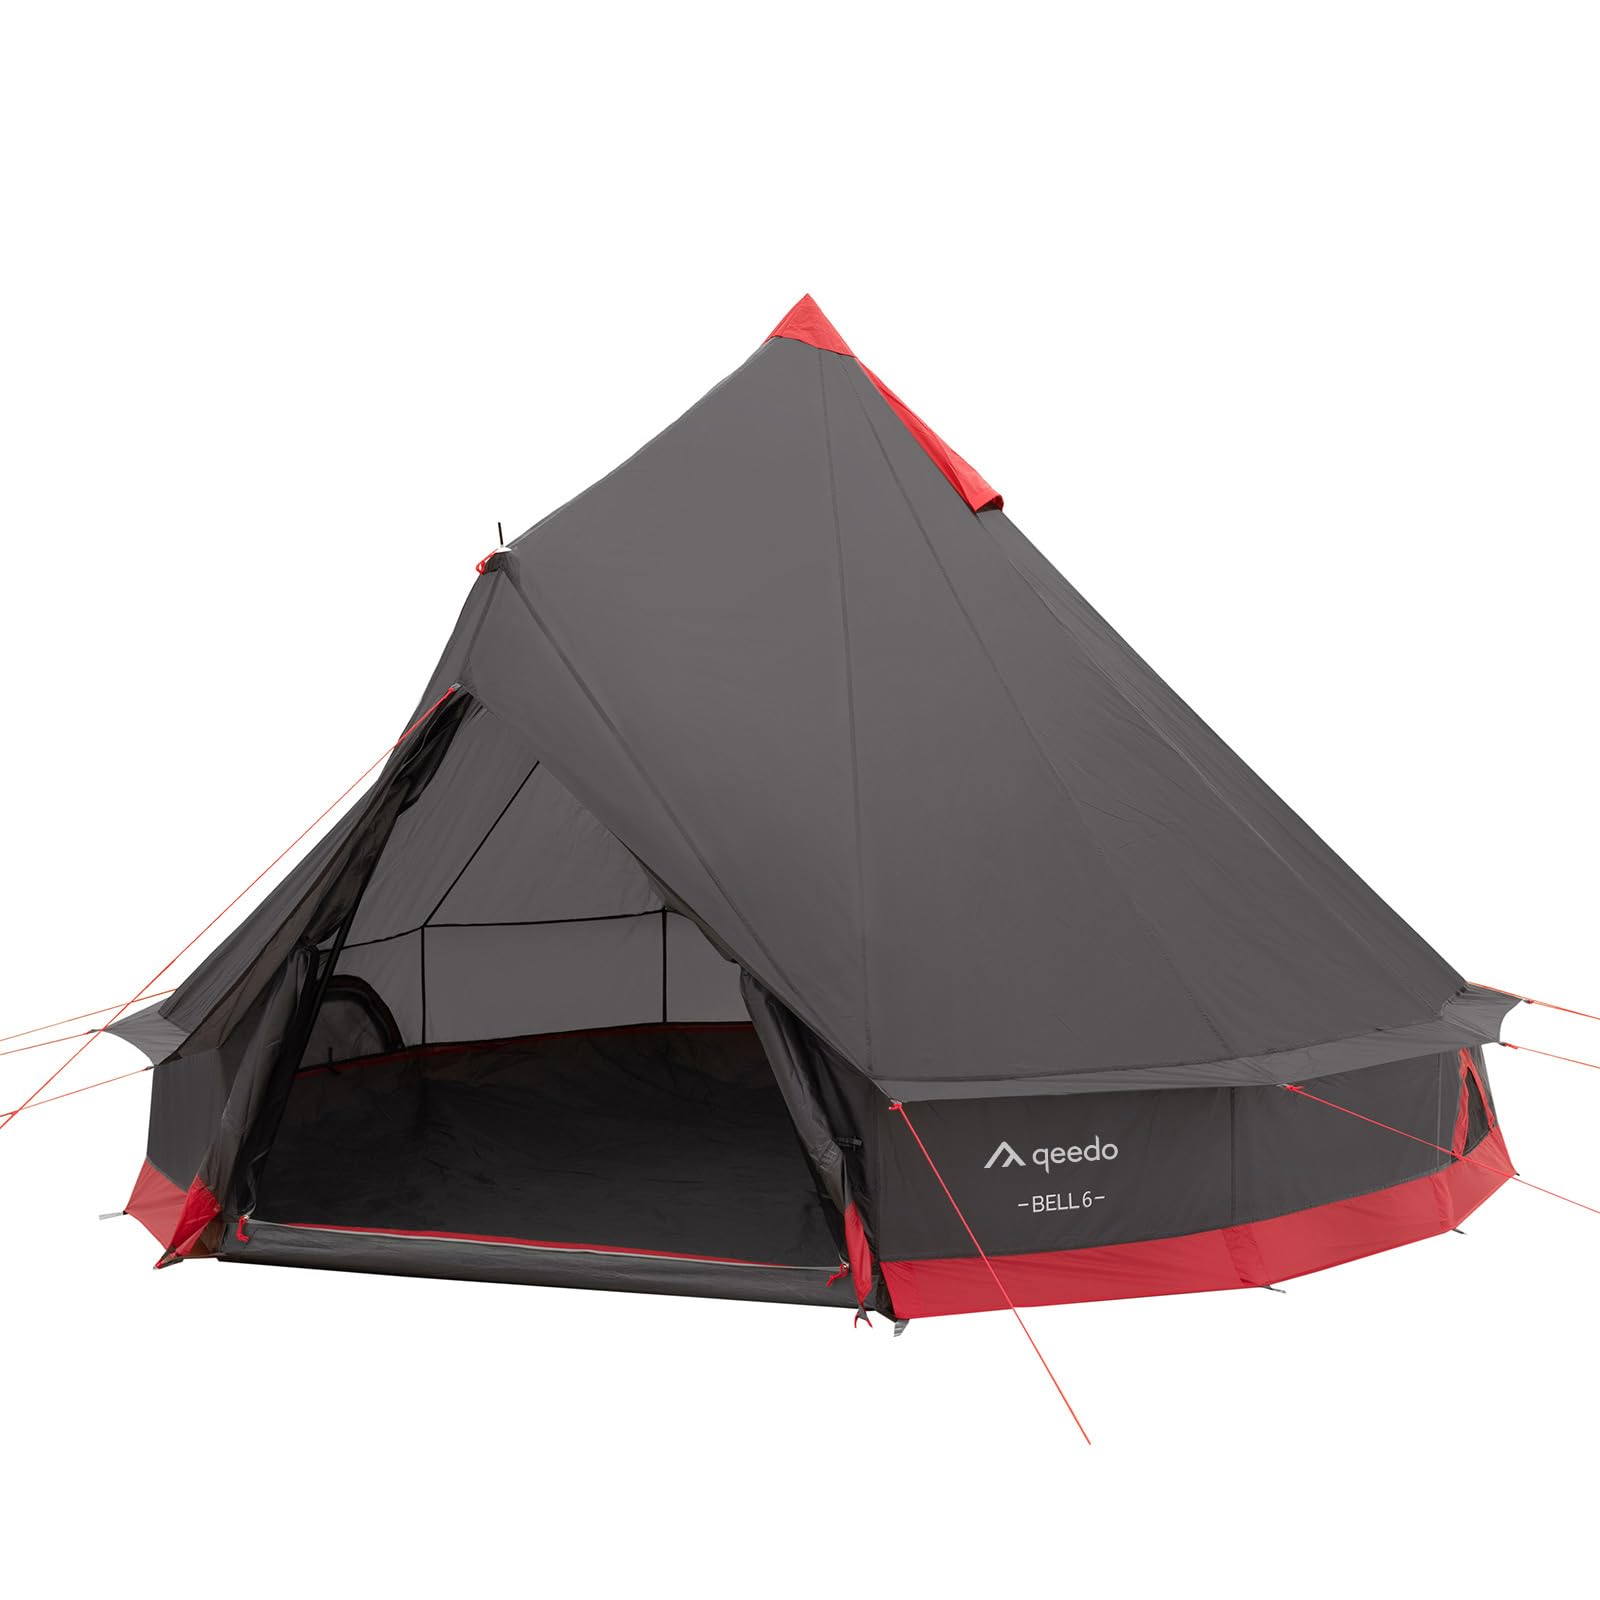 qeedo Bell 6 Tipi Zelt für Gruppen, Familien oder Camping bis zu 6 Personen